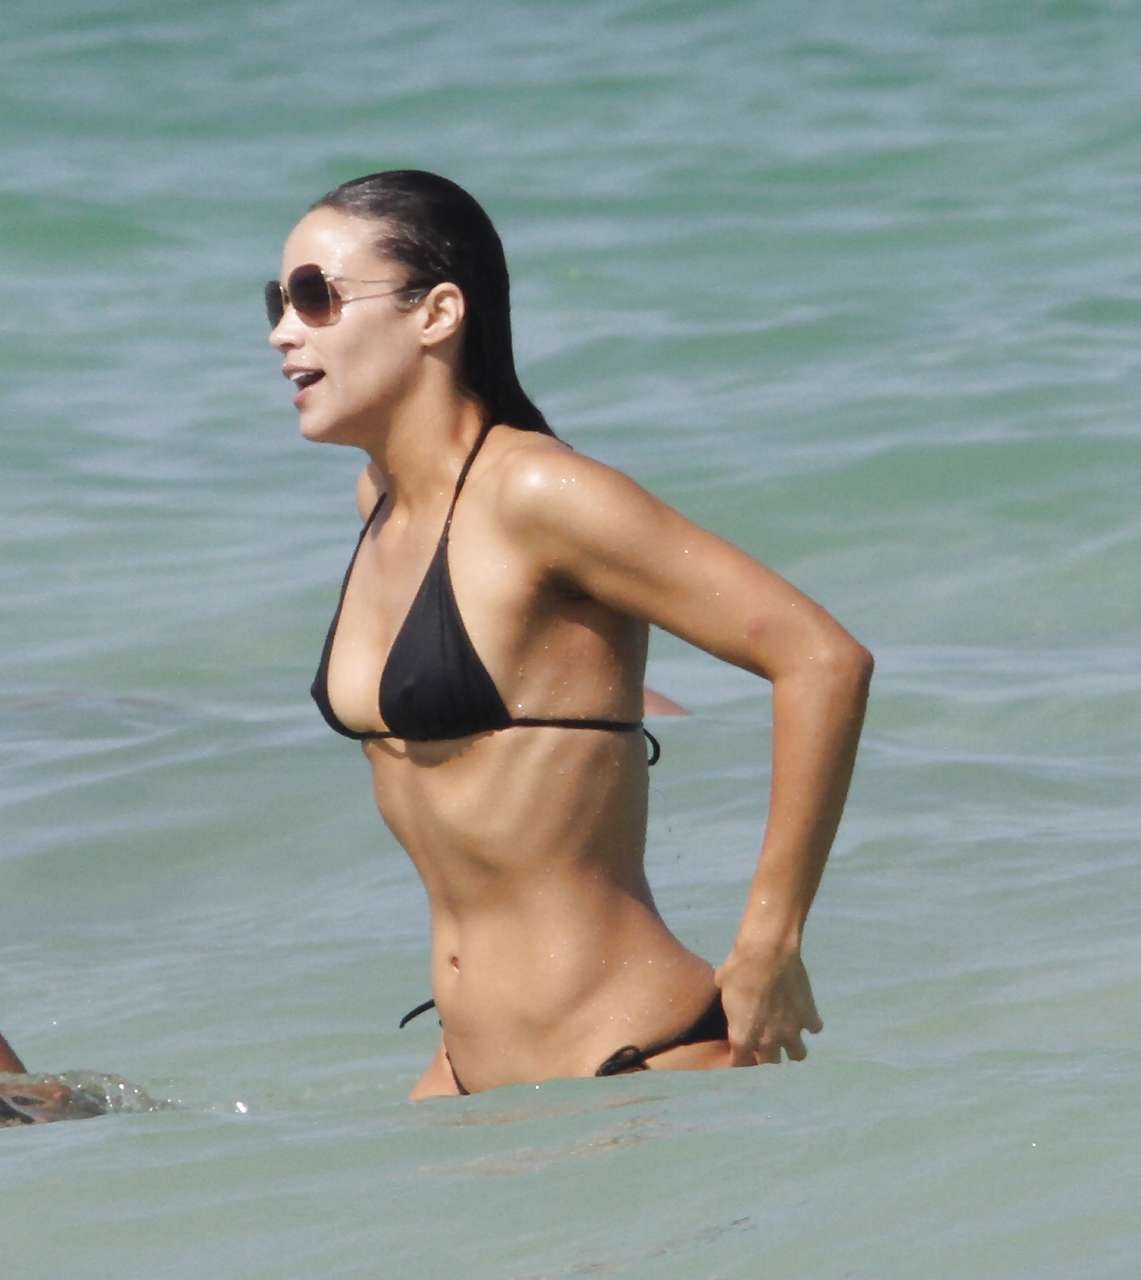 Paula Patton looking very sexy in skimpy black bikini on beach paparazzi picture #75296583